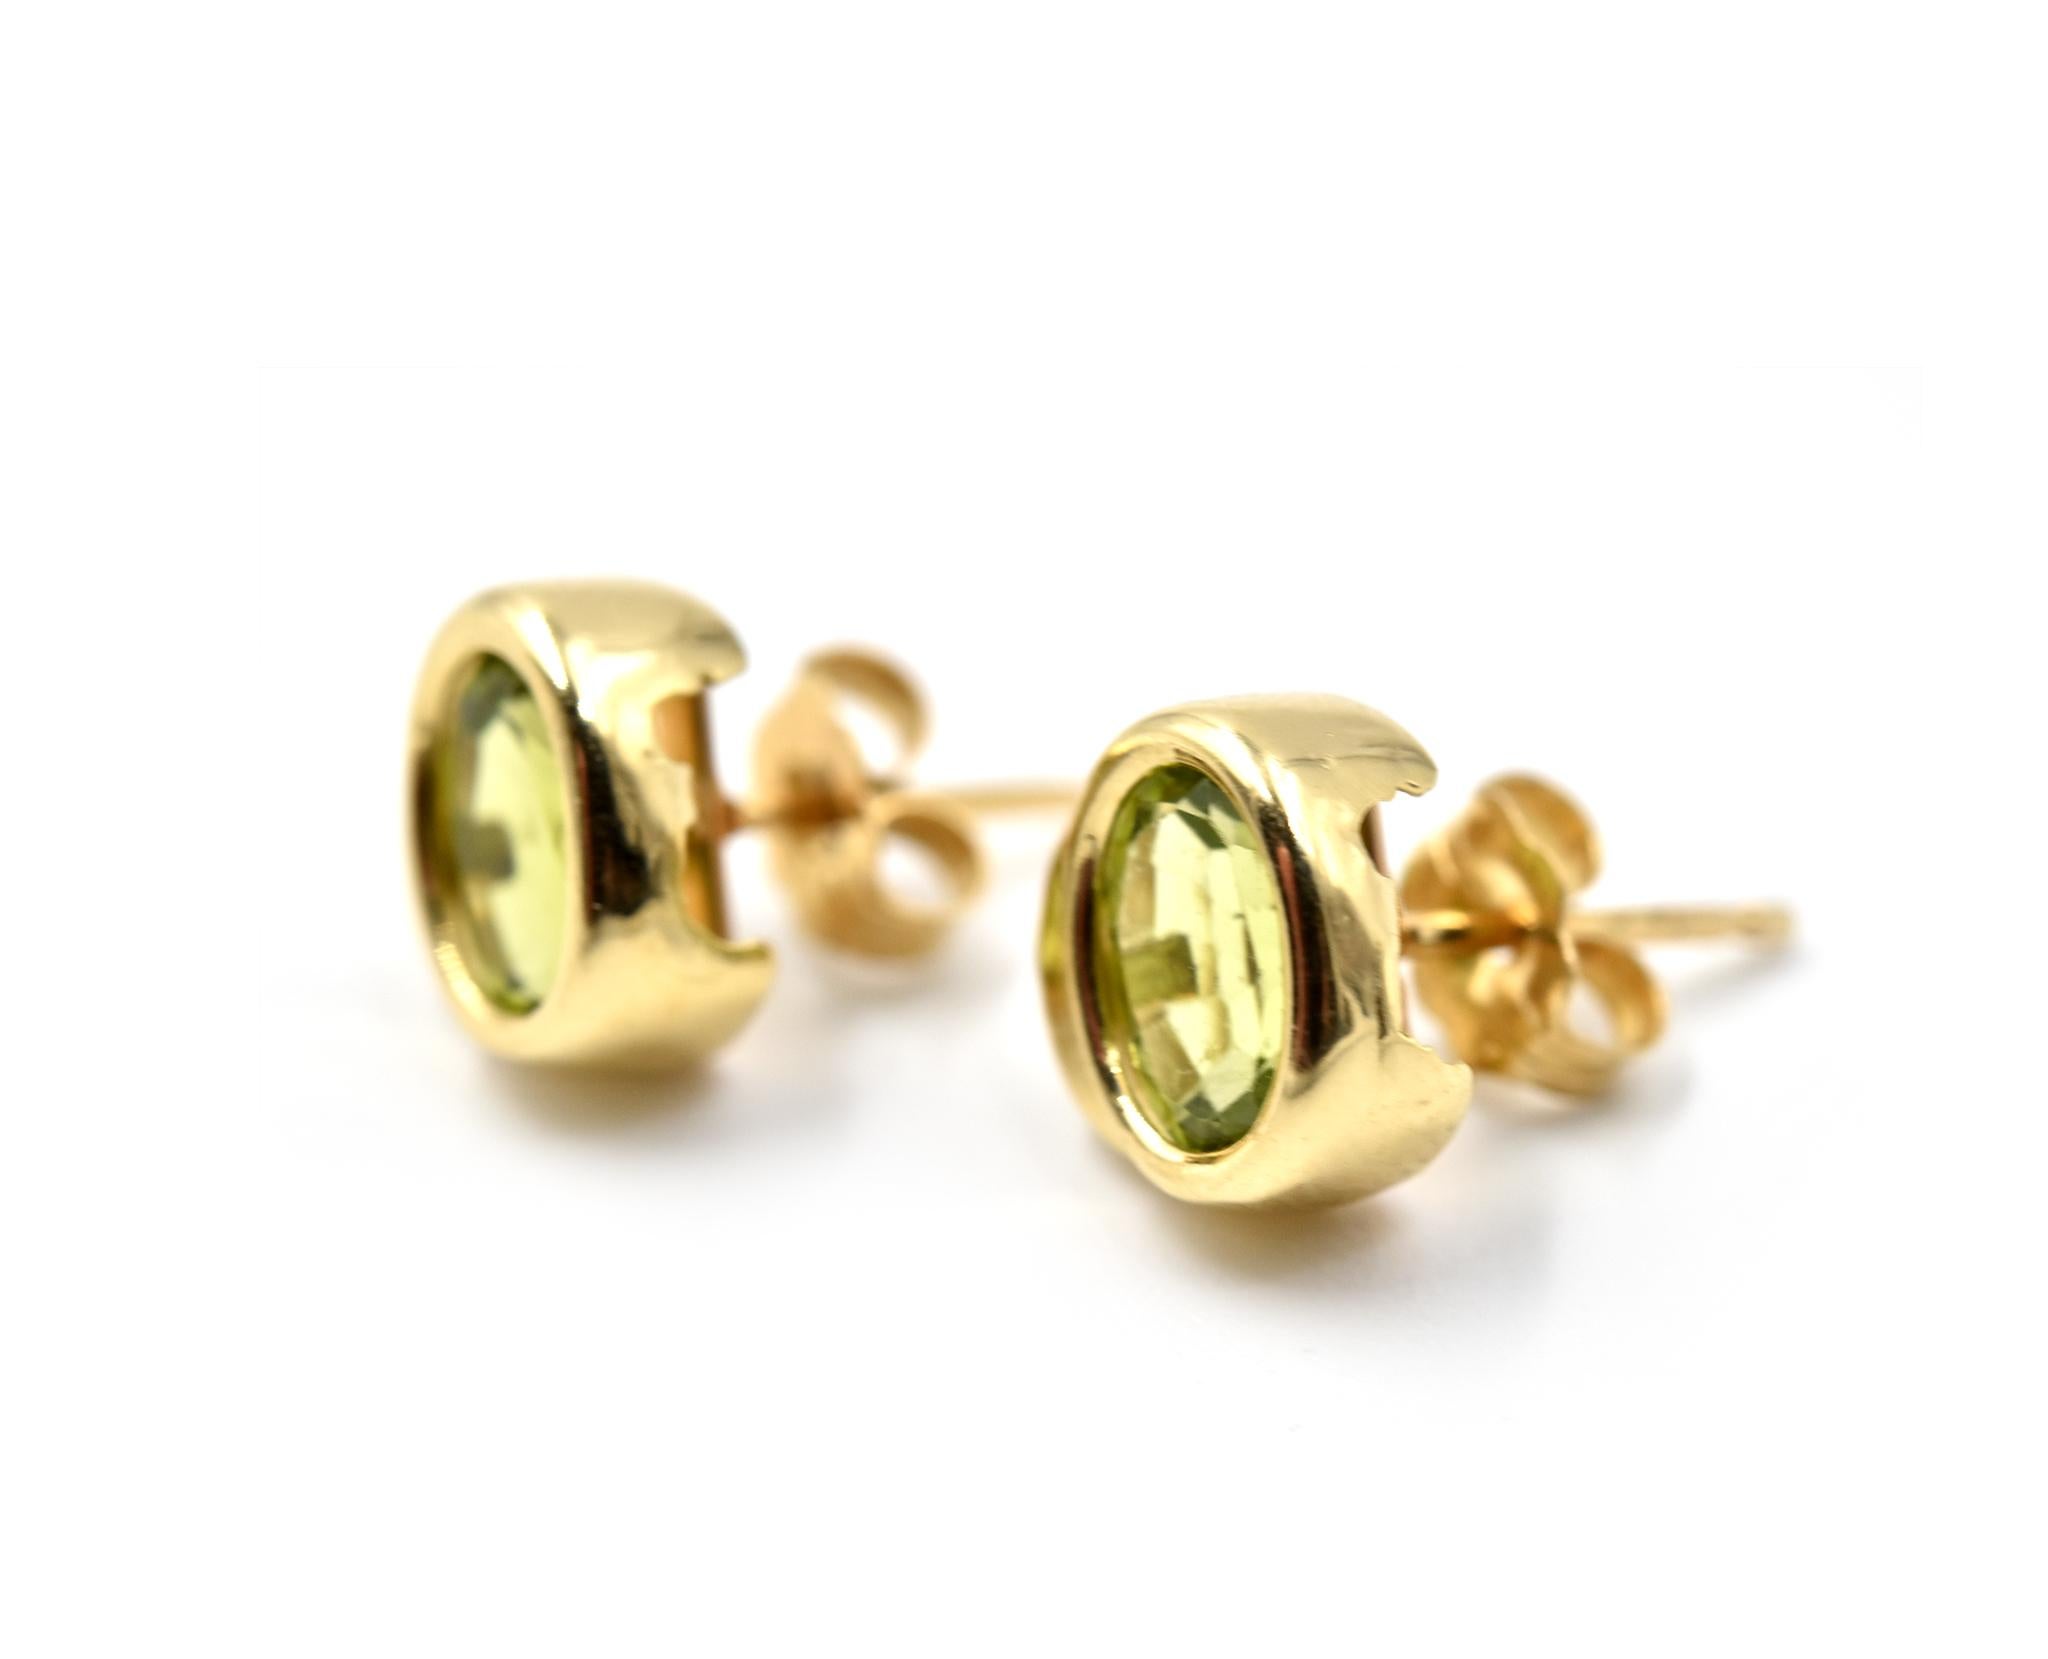 Designer: custom design
Material: 14k yellow gold
Gemstone: two oval cut peridot gemstones
Fastenings: friction backs
Weight: 2.03 grams
